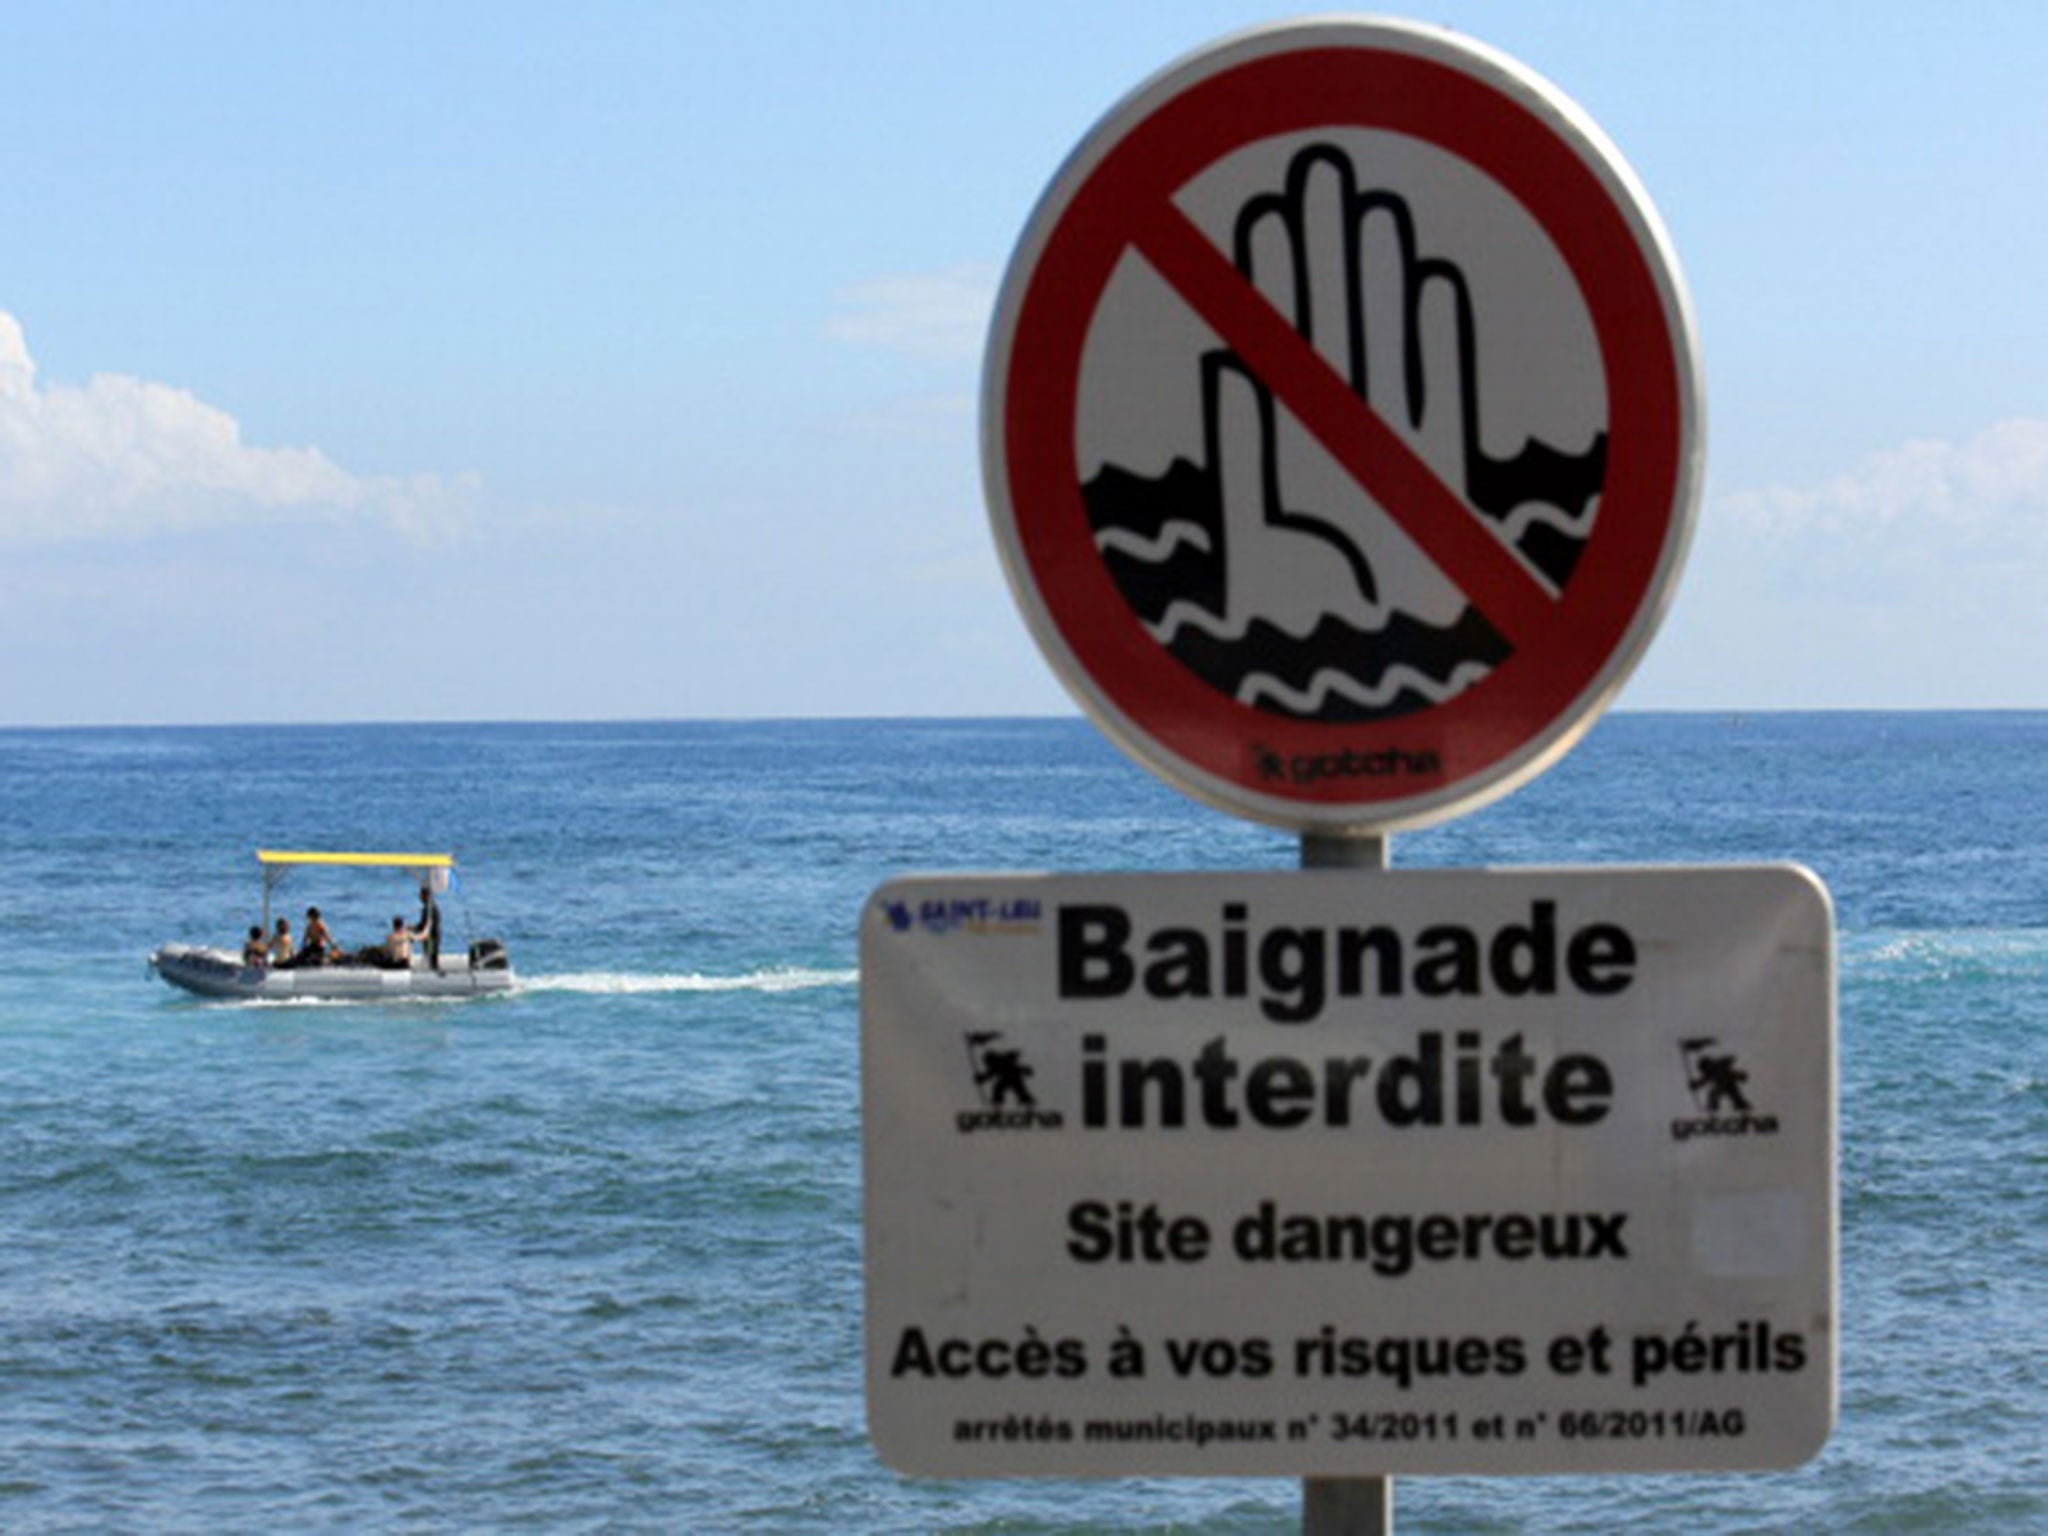 Swimming had previously been prohibited on Saint-Leu de La Réunion beach